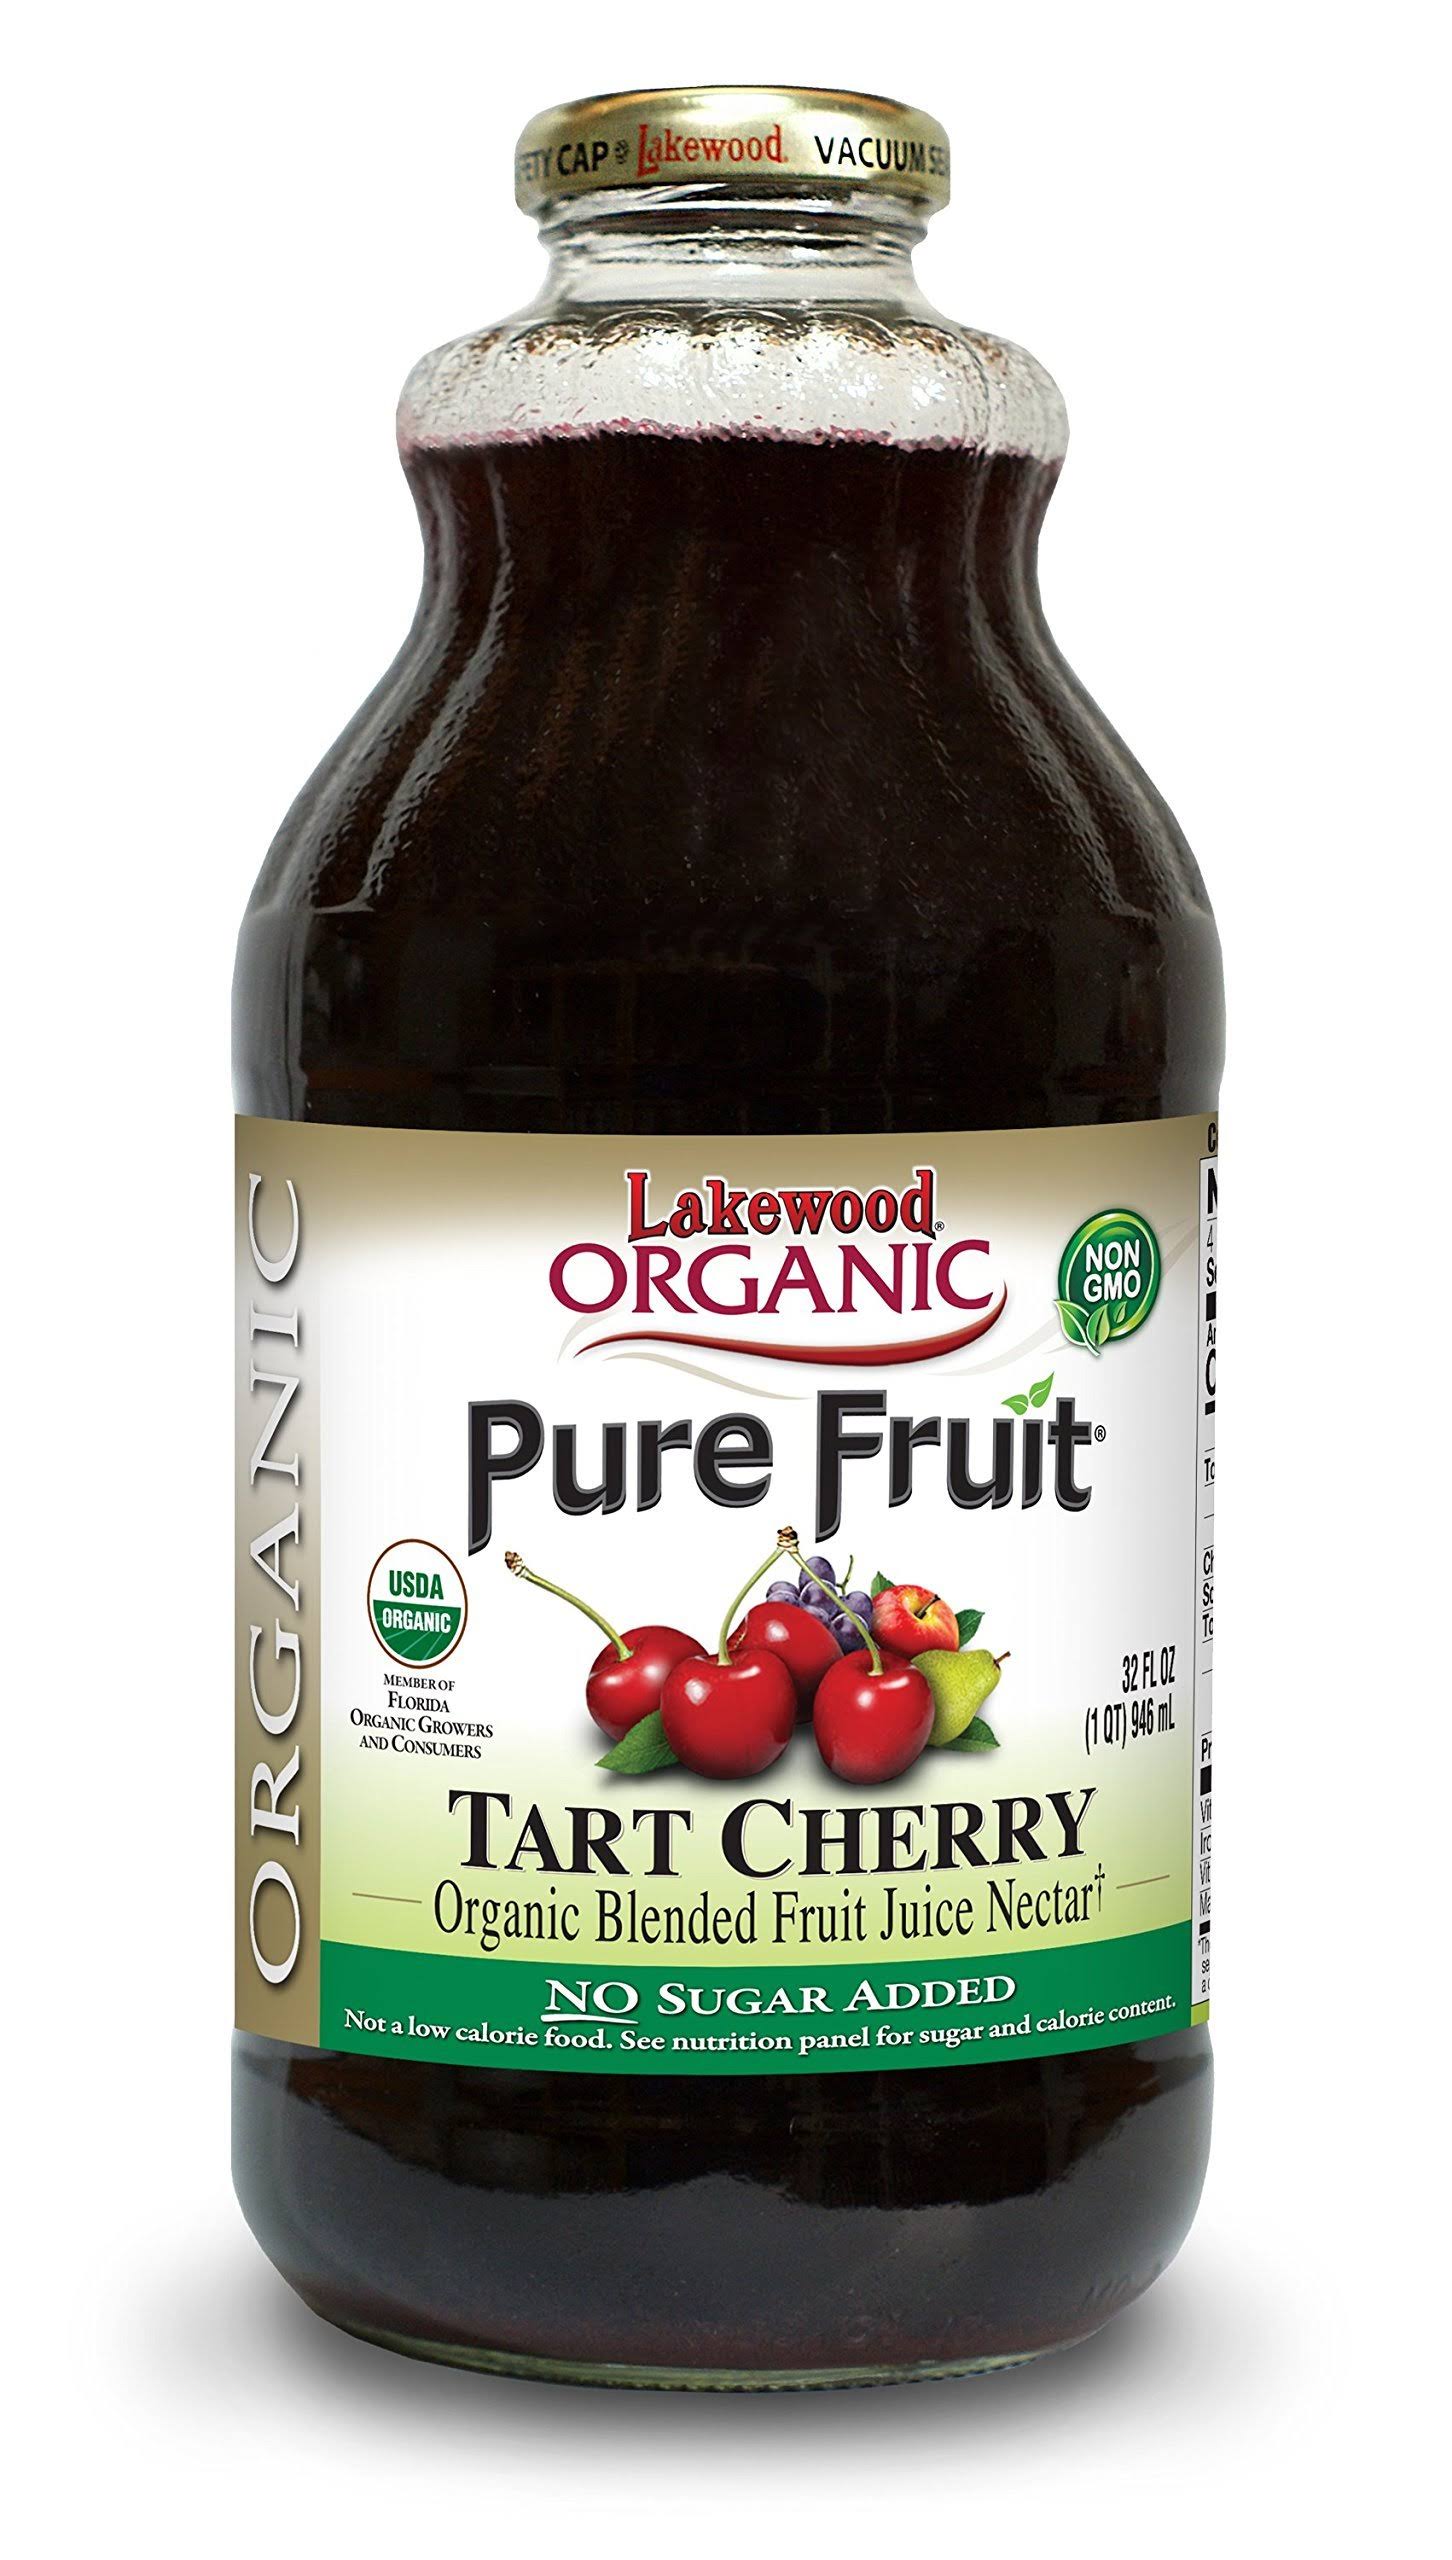 Lakewood 100% Juice, Organic, Tart Cherry Blend - 32 fl oz